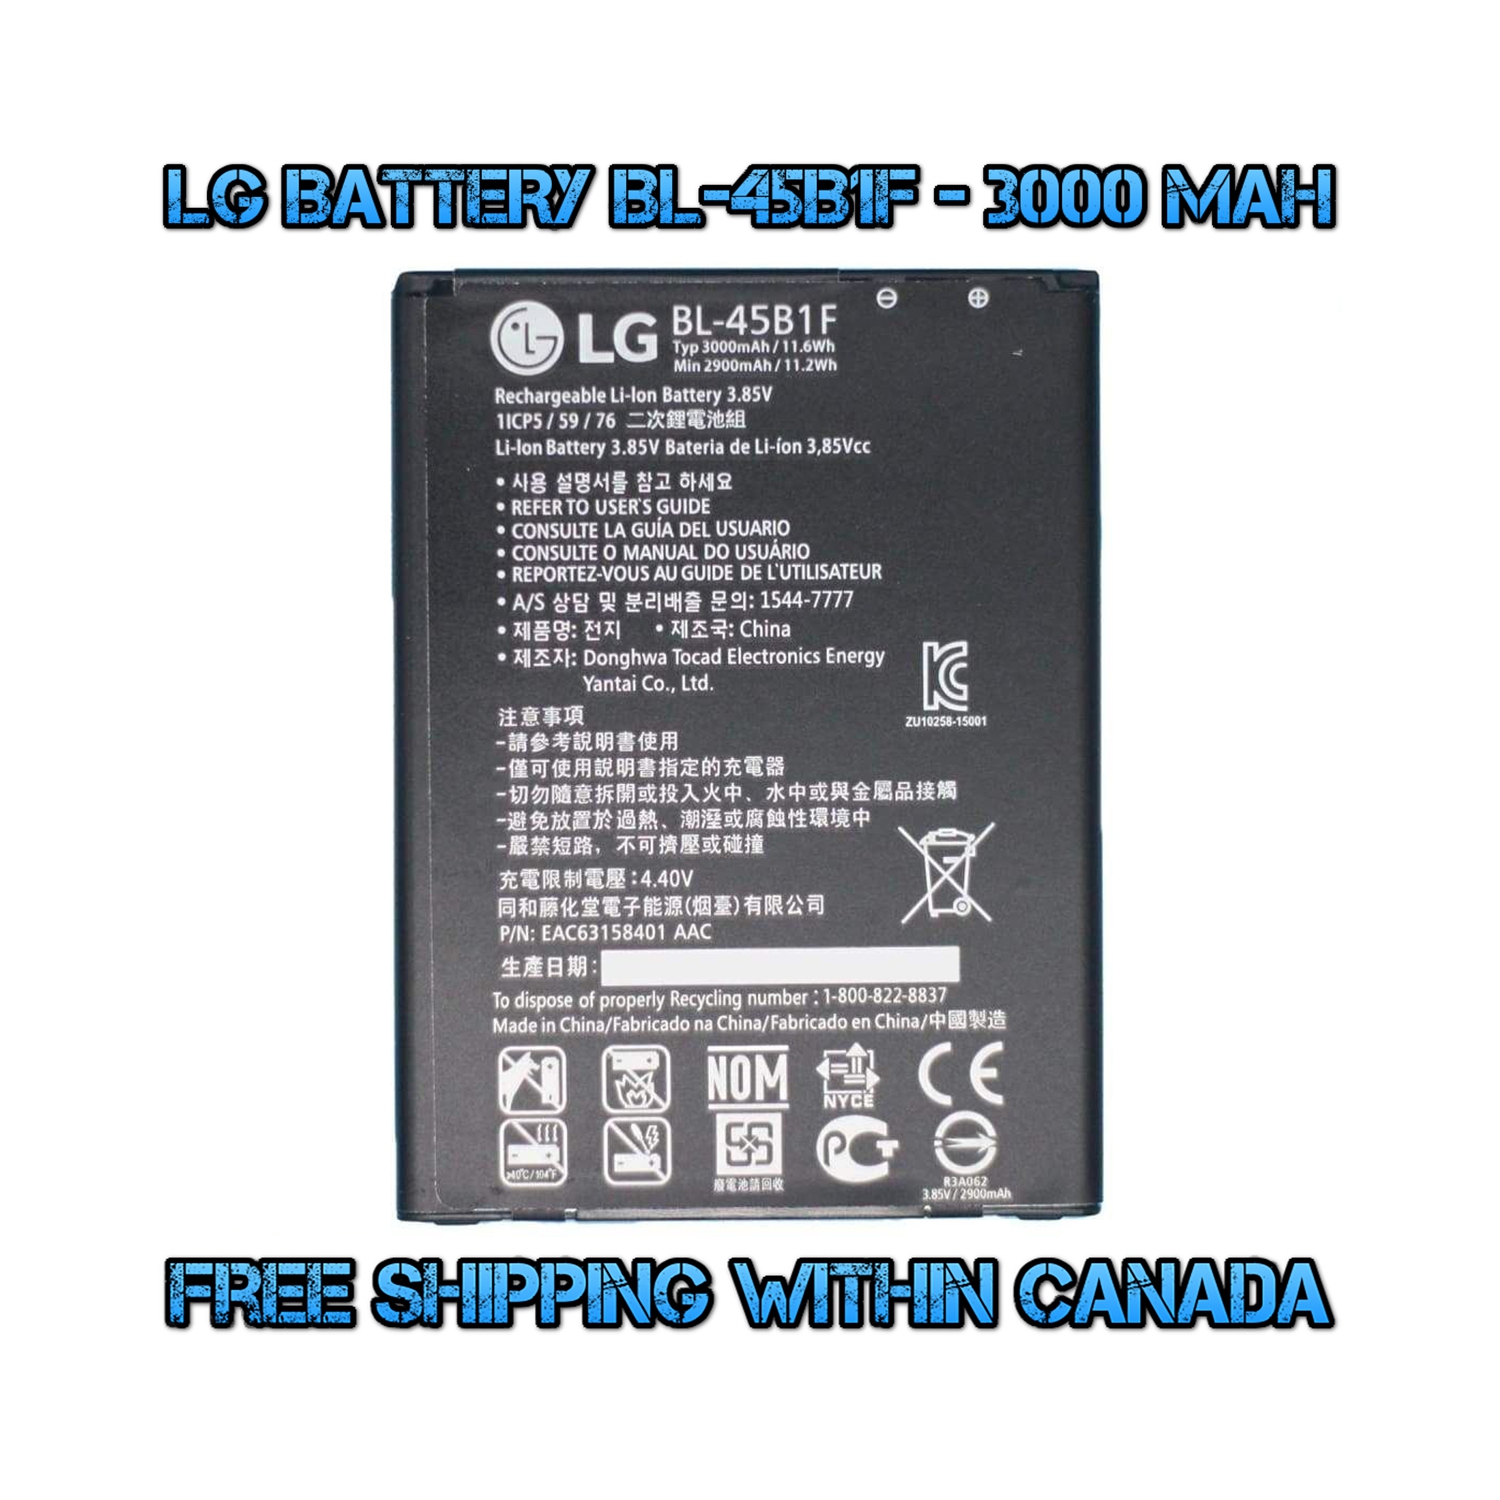 Original LG BL-45B1F 3000 mAh Battery for V10 Stylo 2 H900 H901 H960 LS775 VS990